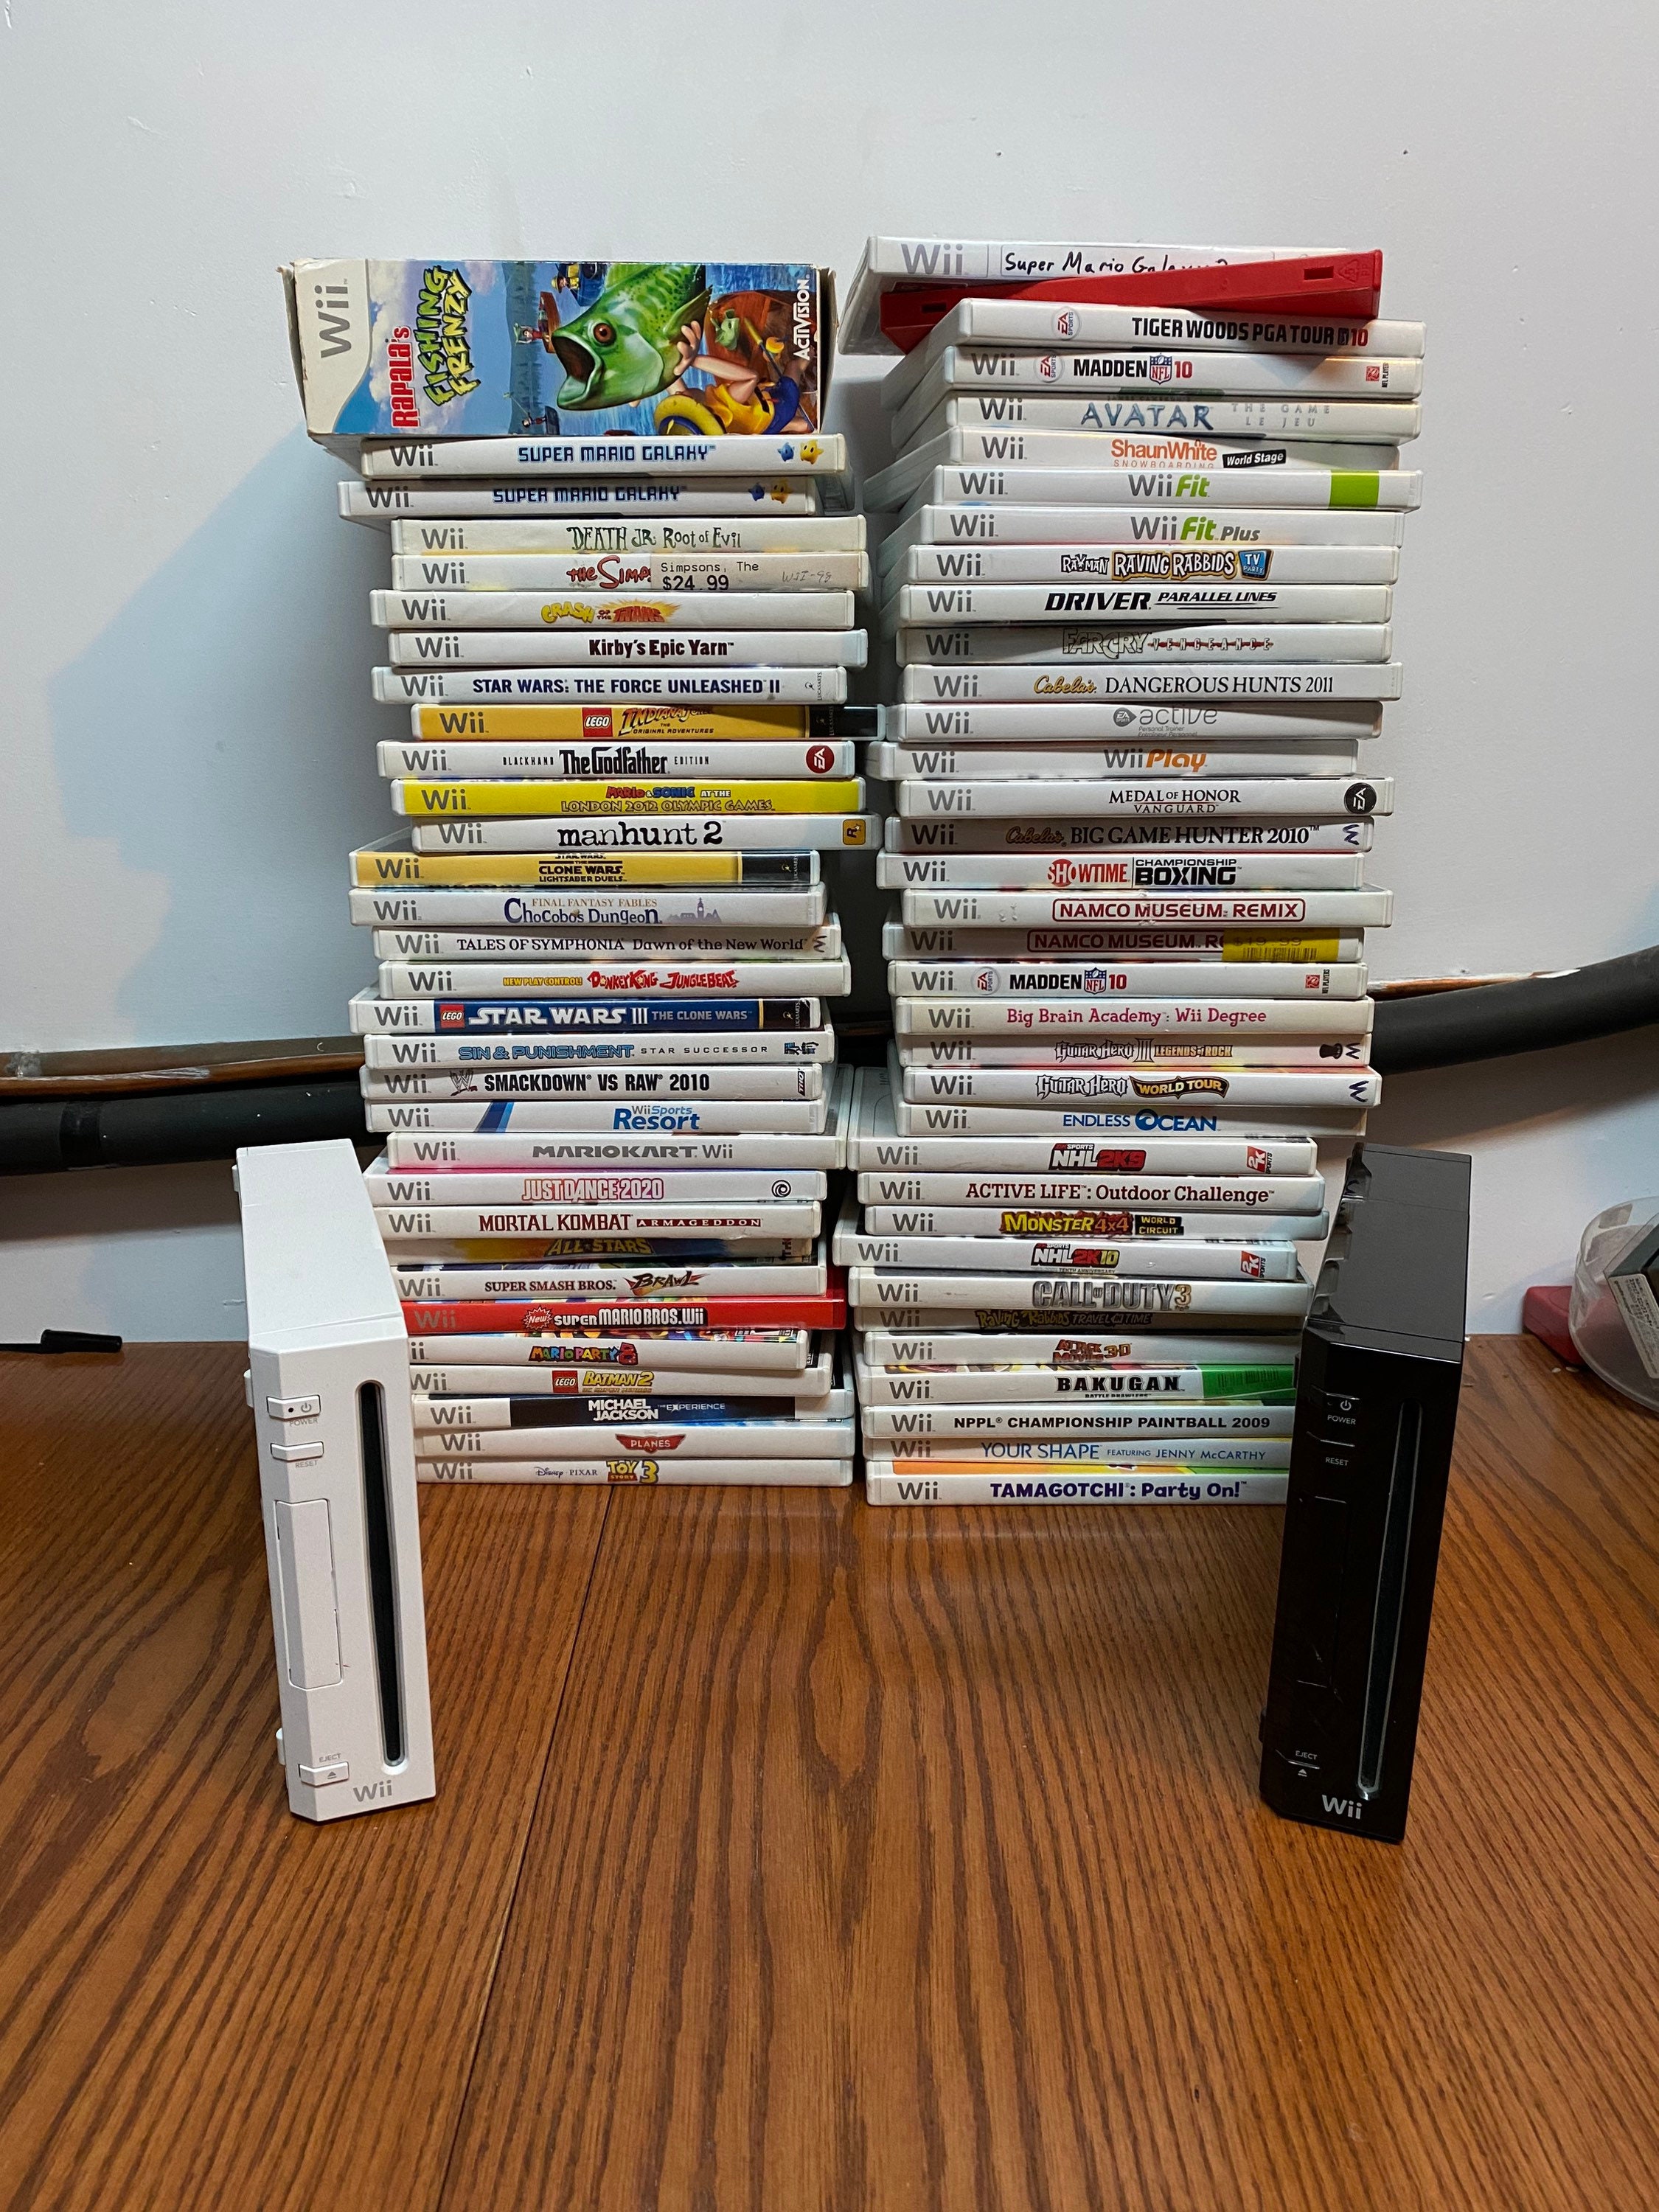 Vendita Wii Sport Resort - Nintendo - Retrogaming Shop